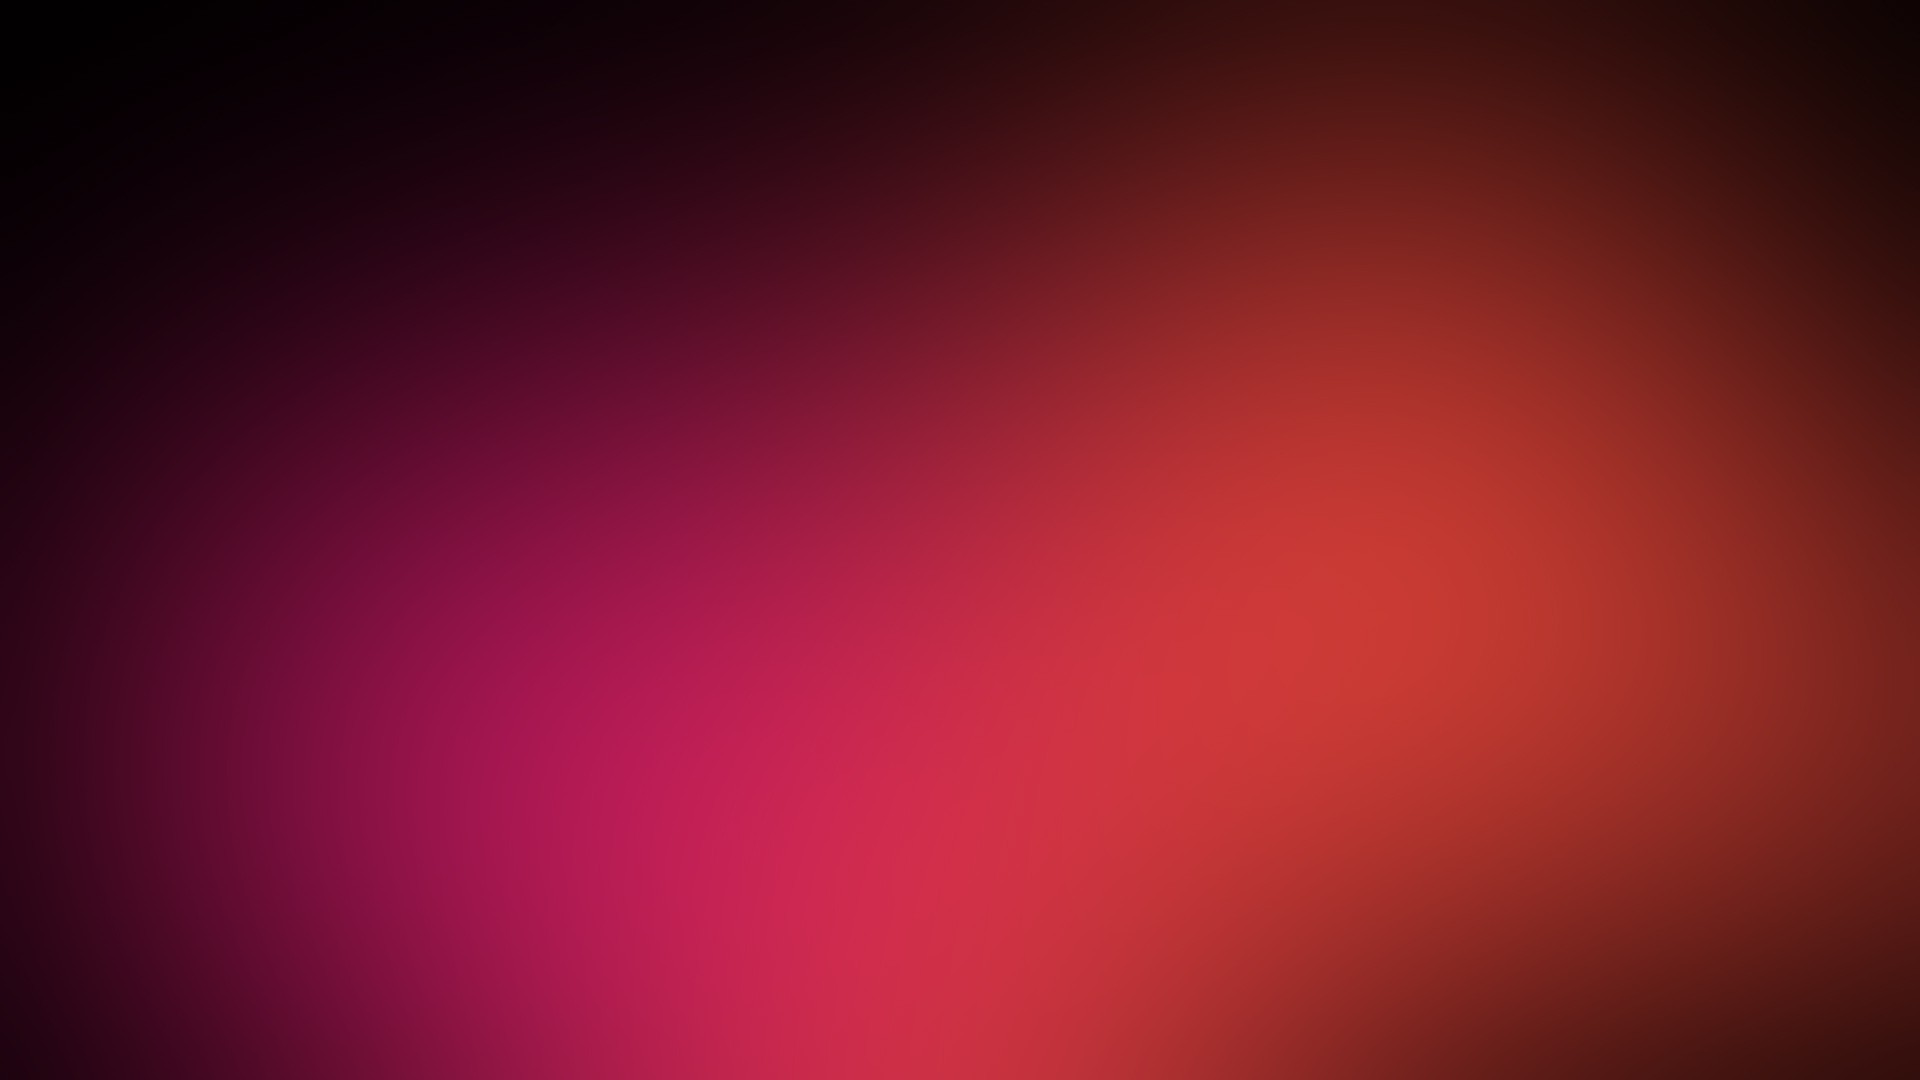 [48+] Red and Pink Wallpaper on WallpaperSafari